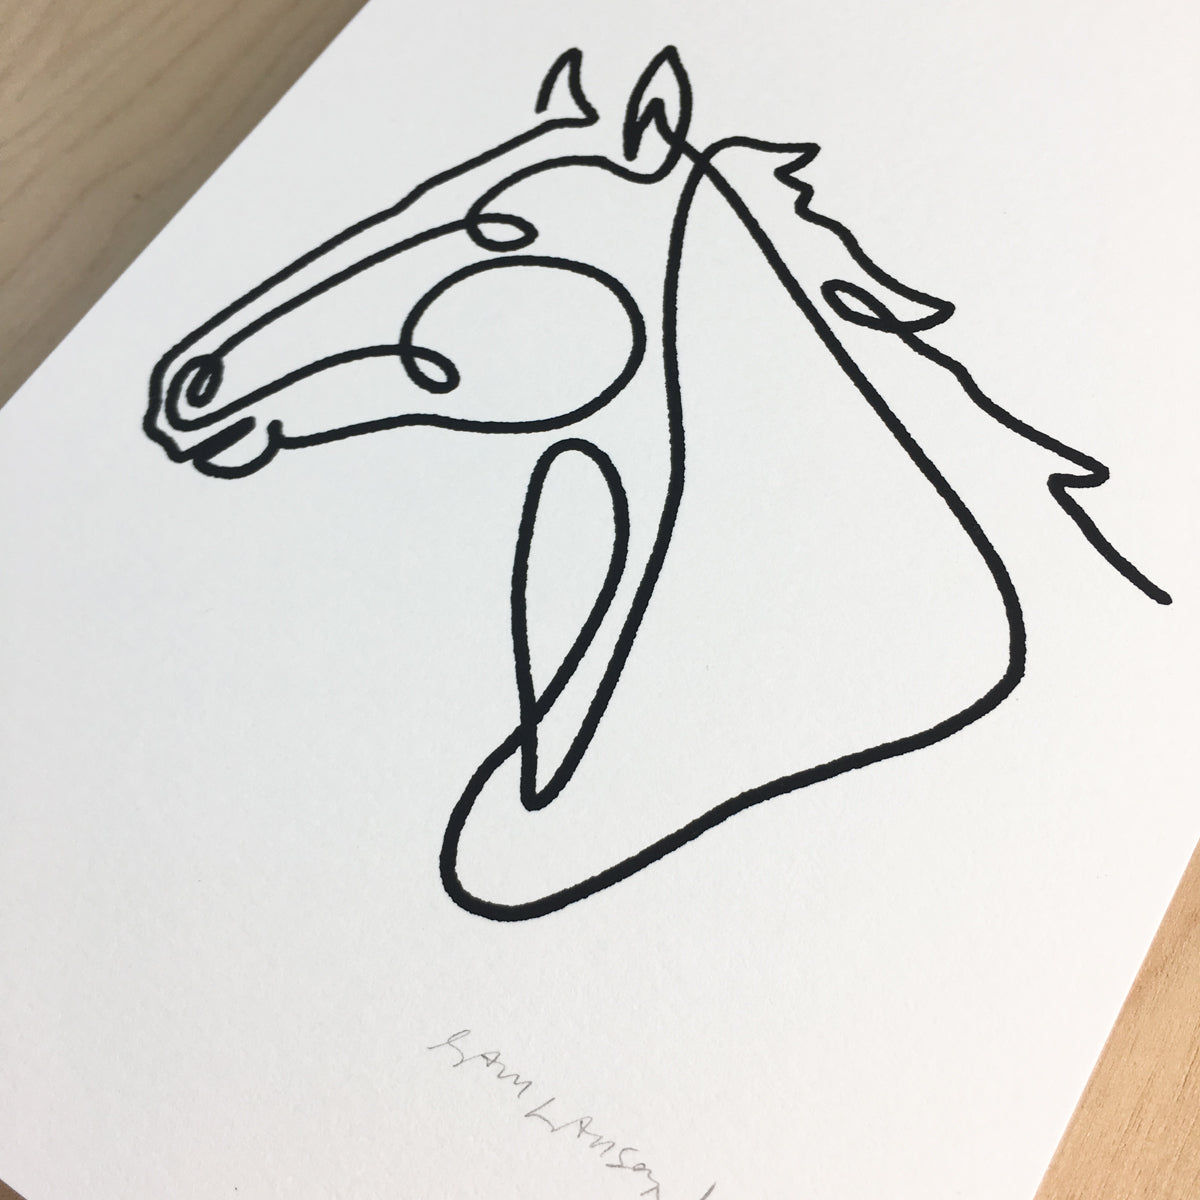 Mono Horse - Signed Print #129